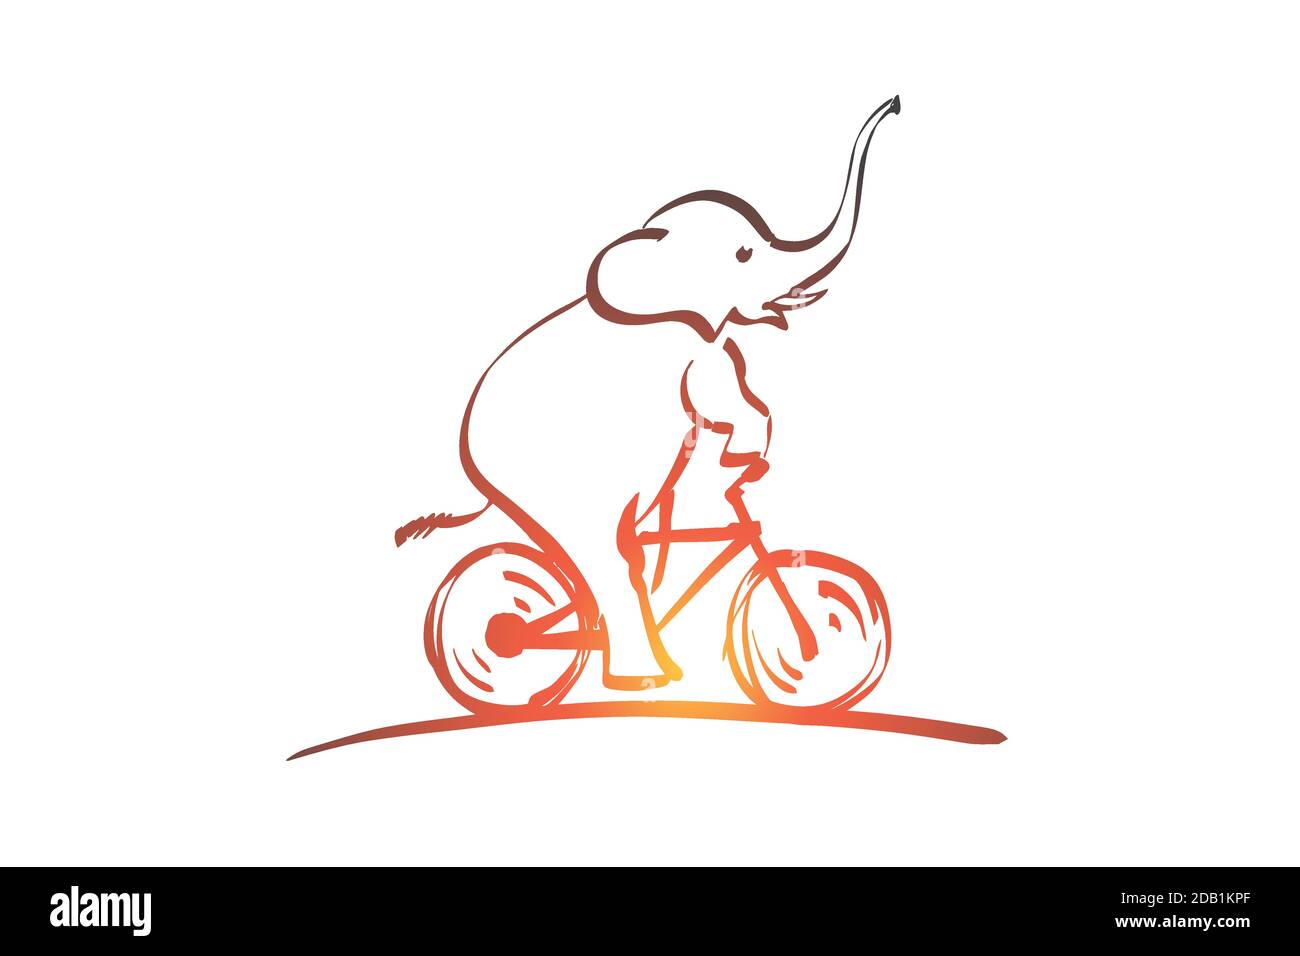 Handgezeichneter Elefant Reiten Fahrrad Stock-Vektorgrafik - Alamy